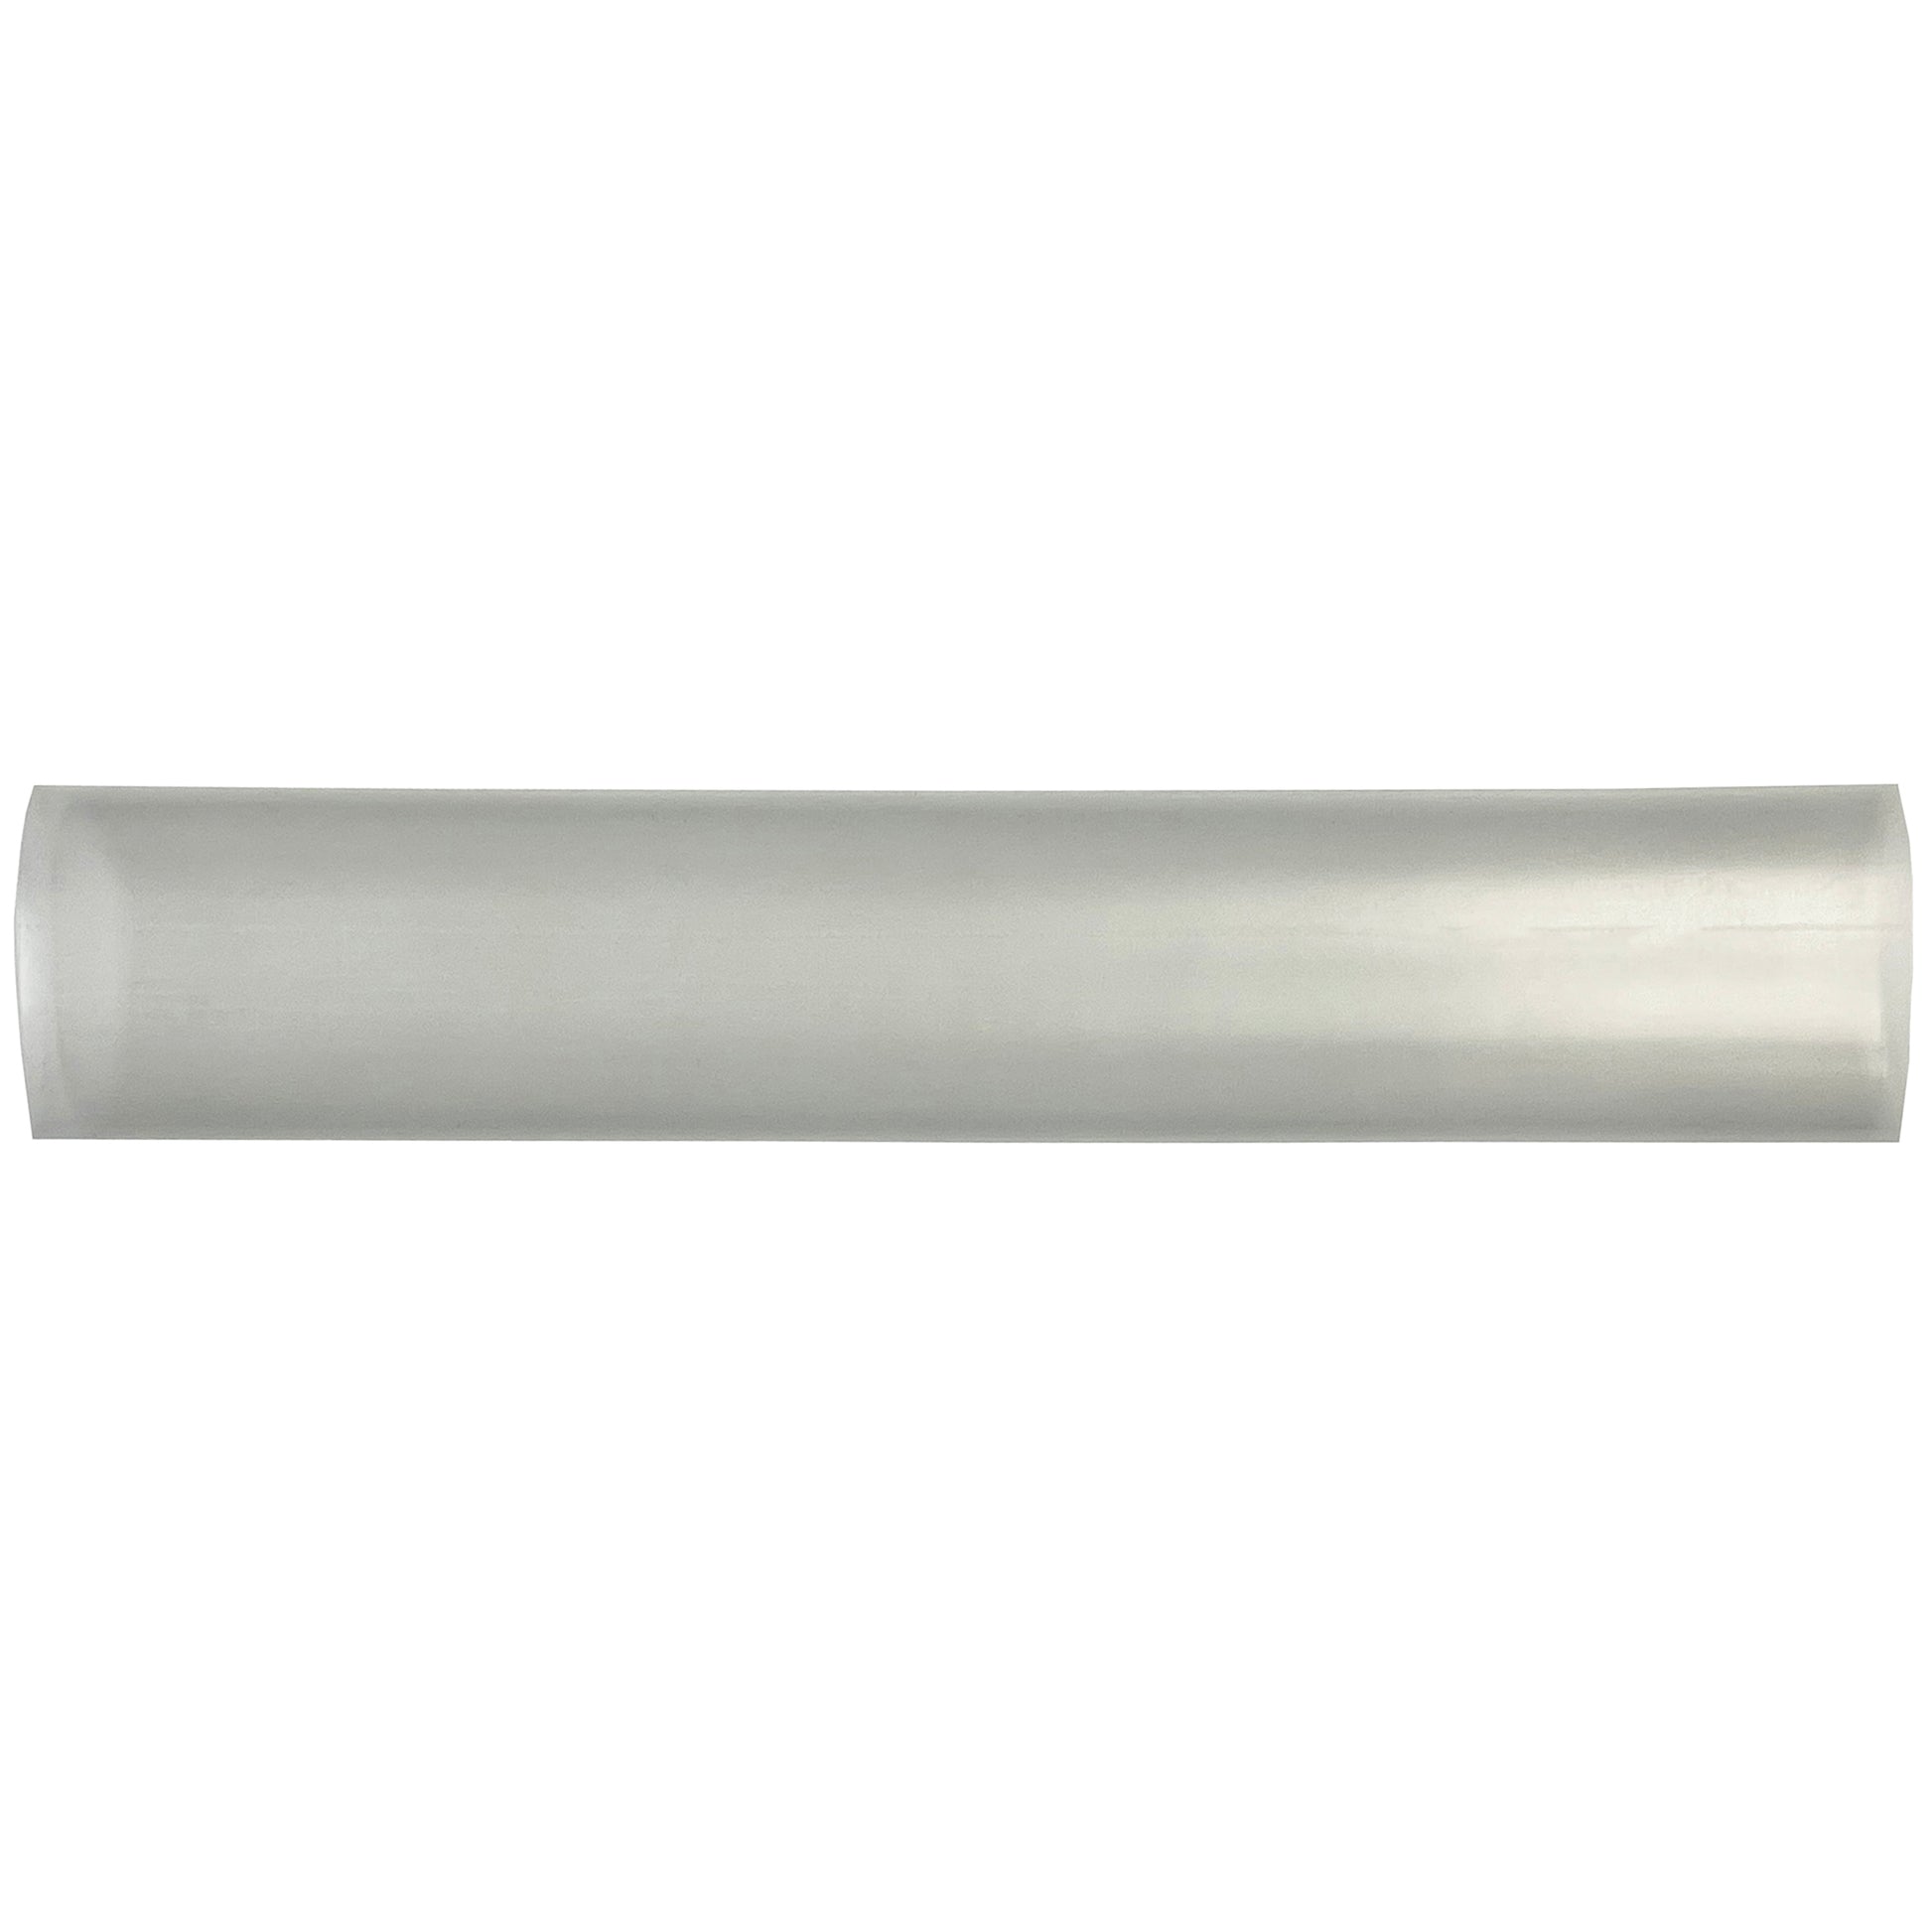 Flexible Thin Single Wall Non-Adhesive Heat Shrink Tubing 2:1 Clear 3/4" ID - 50' Ft Spool